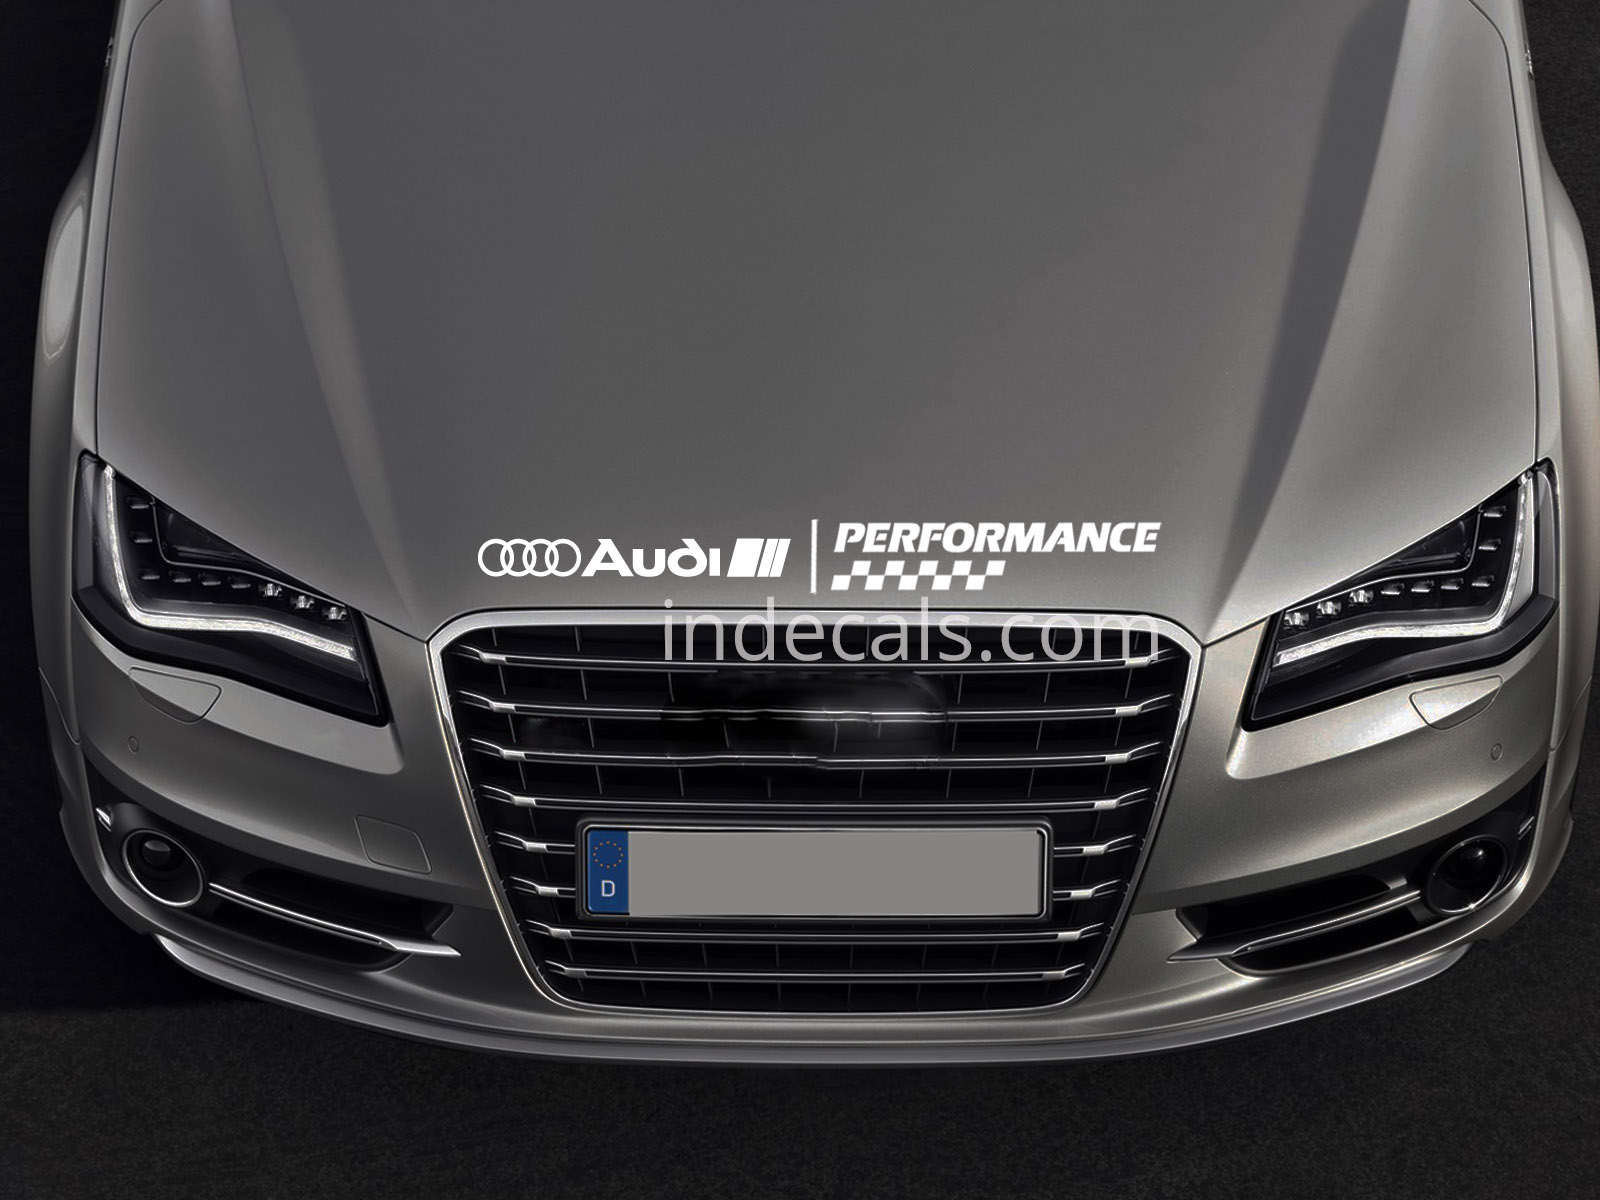 1 x Audi Peformance Sticker for Bonnet - White